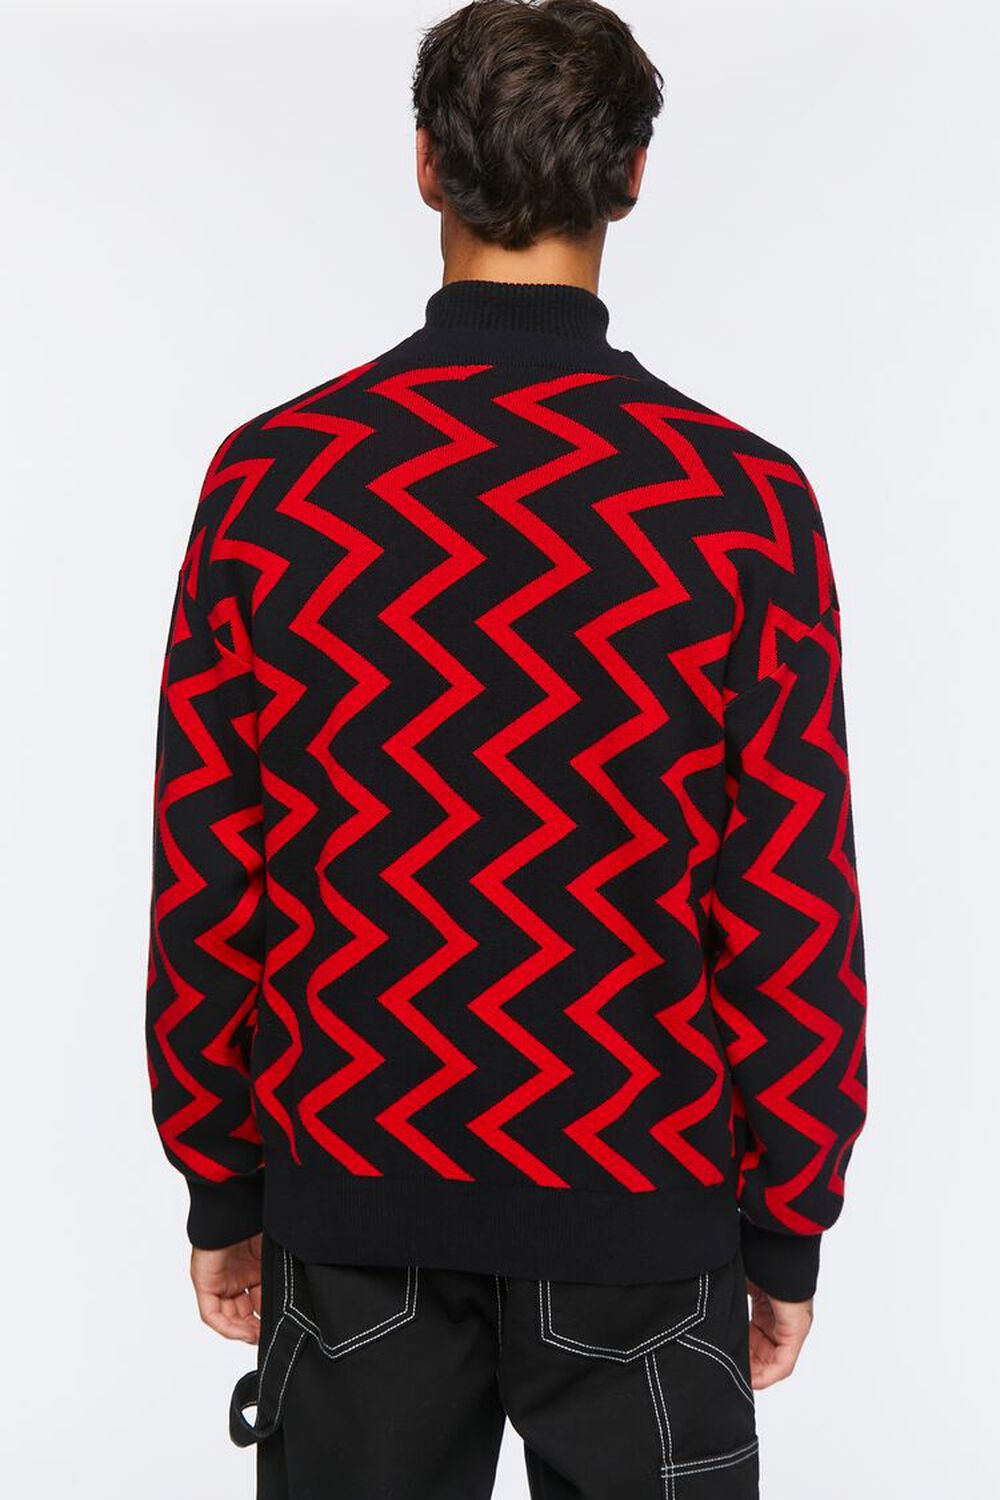 BLACK/RED Chevron Cardigan Sweater, image 3